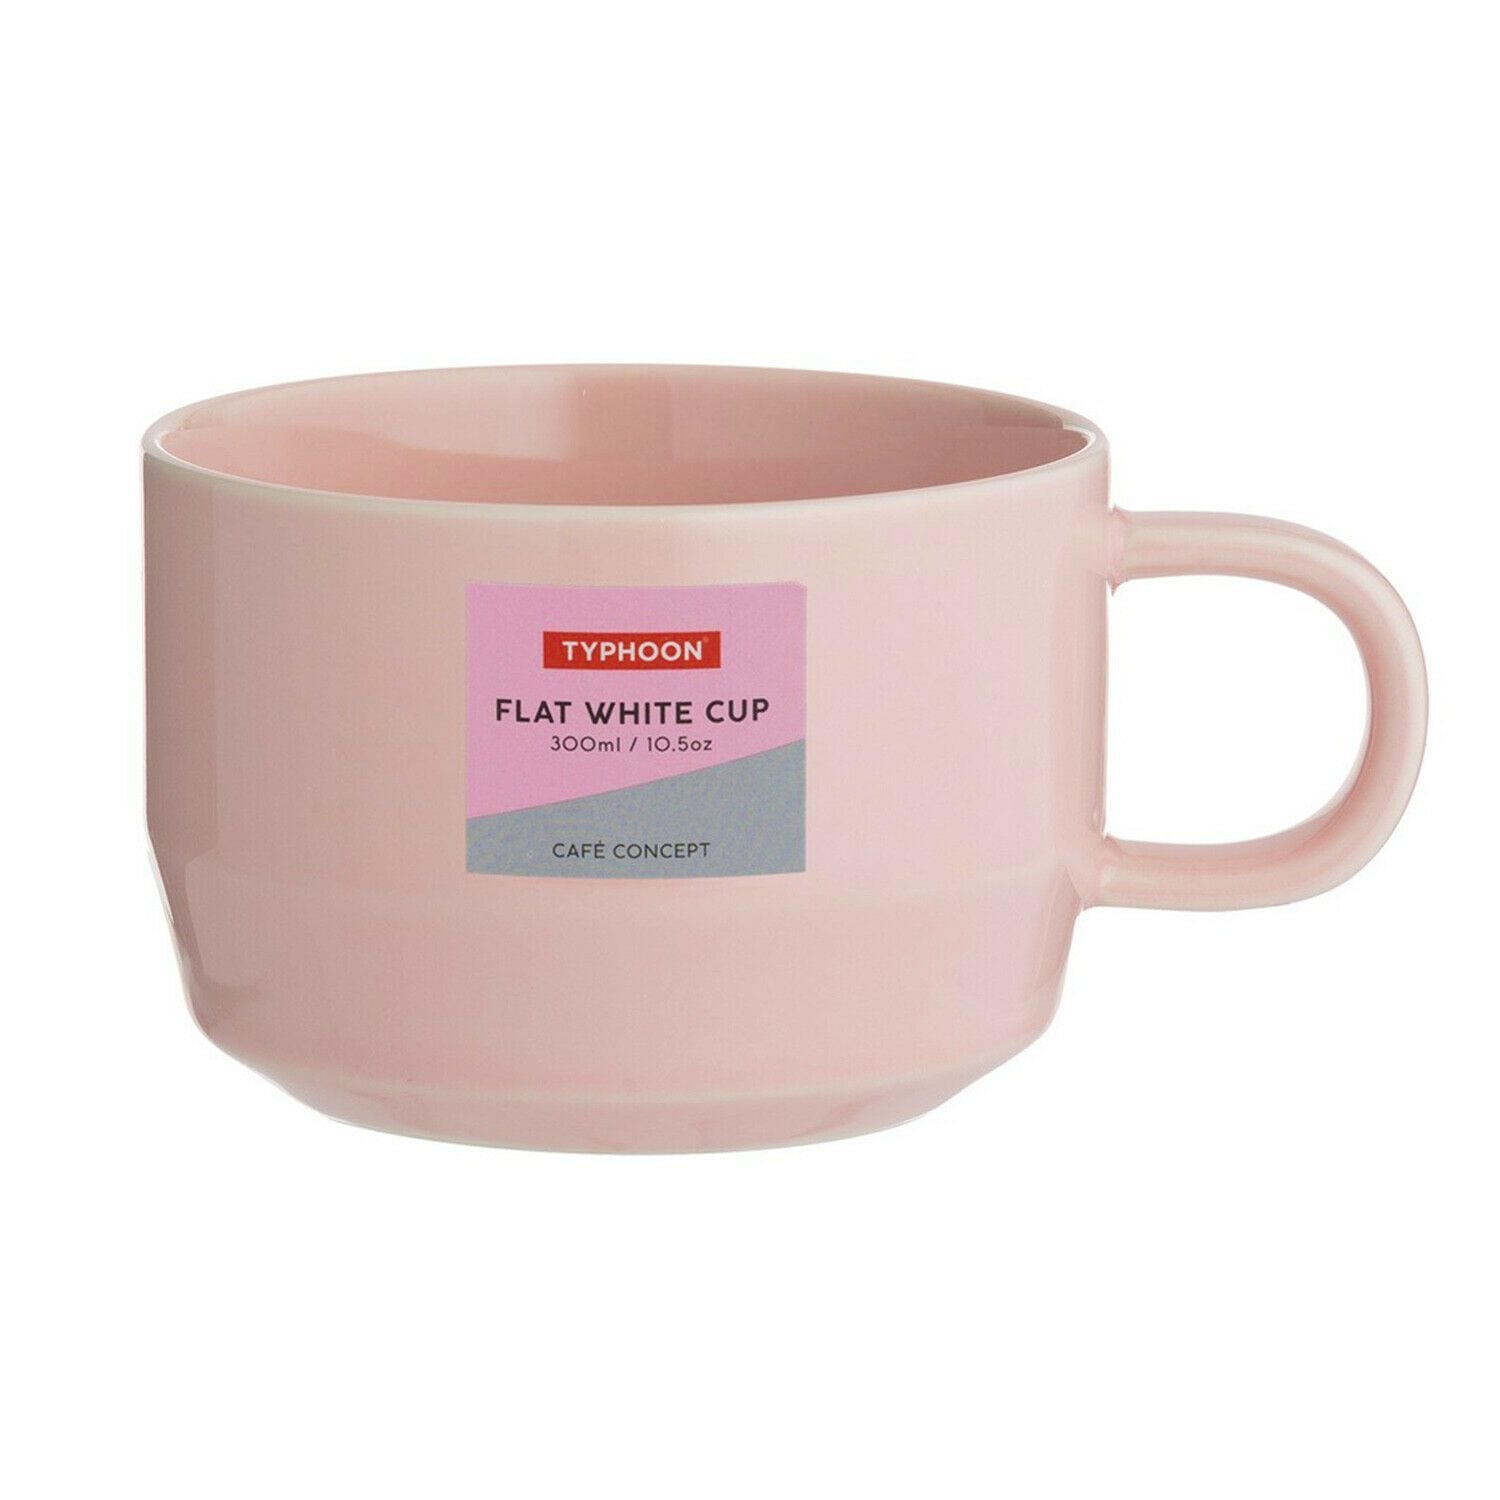 Kitchenware  -  Typhoon Café Concept Pink Flat White Cup  -  50154078